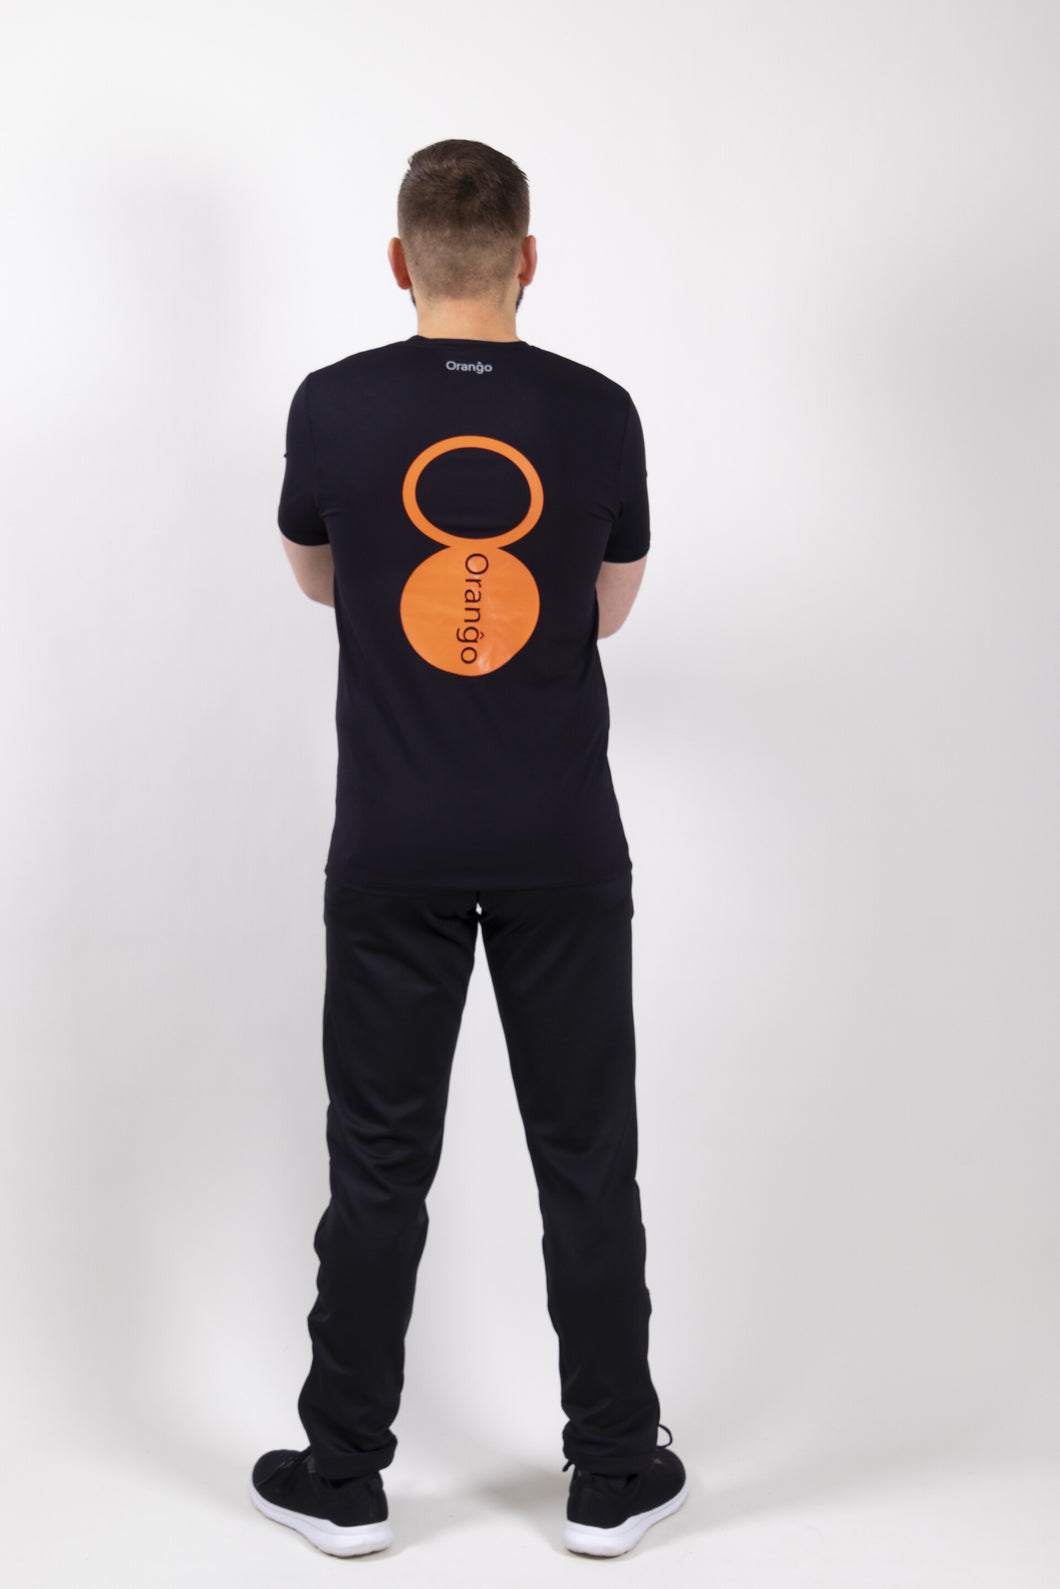 Orango Running - Mens T-shirt short sleeve V-neck -  Regular Fit - Orange - Print: Logo - P010-101E